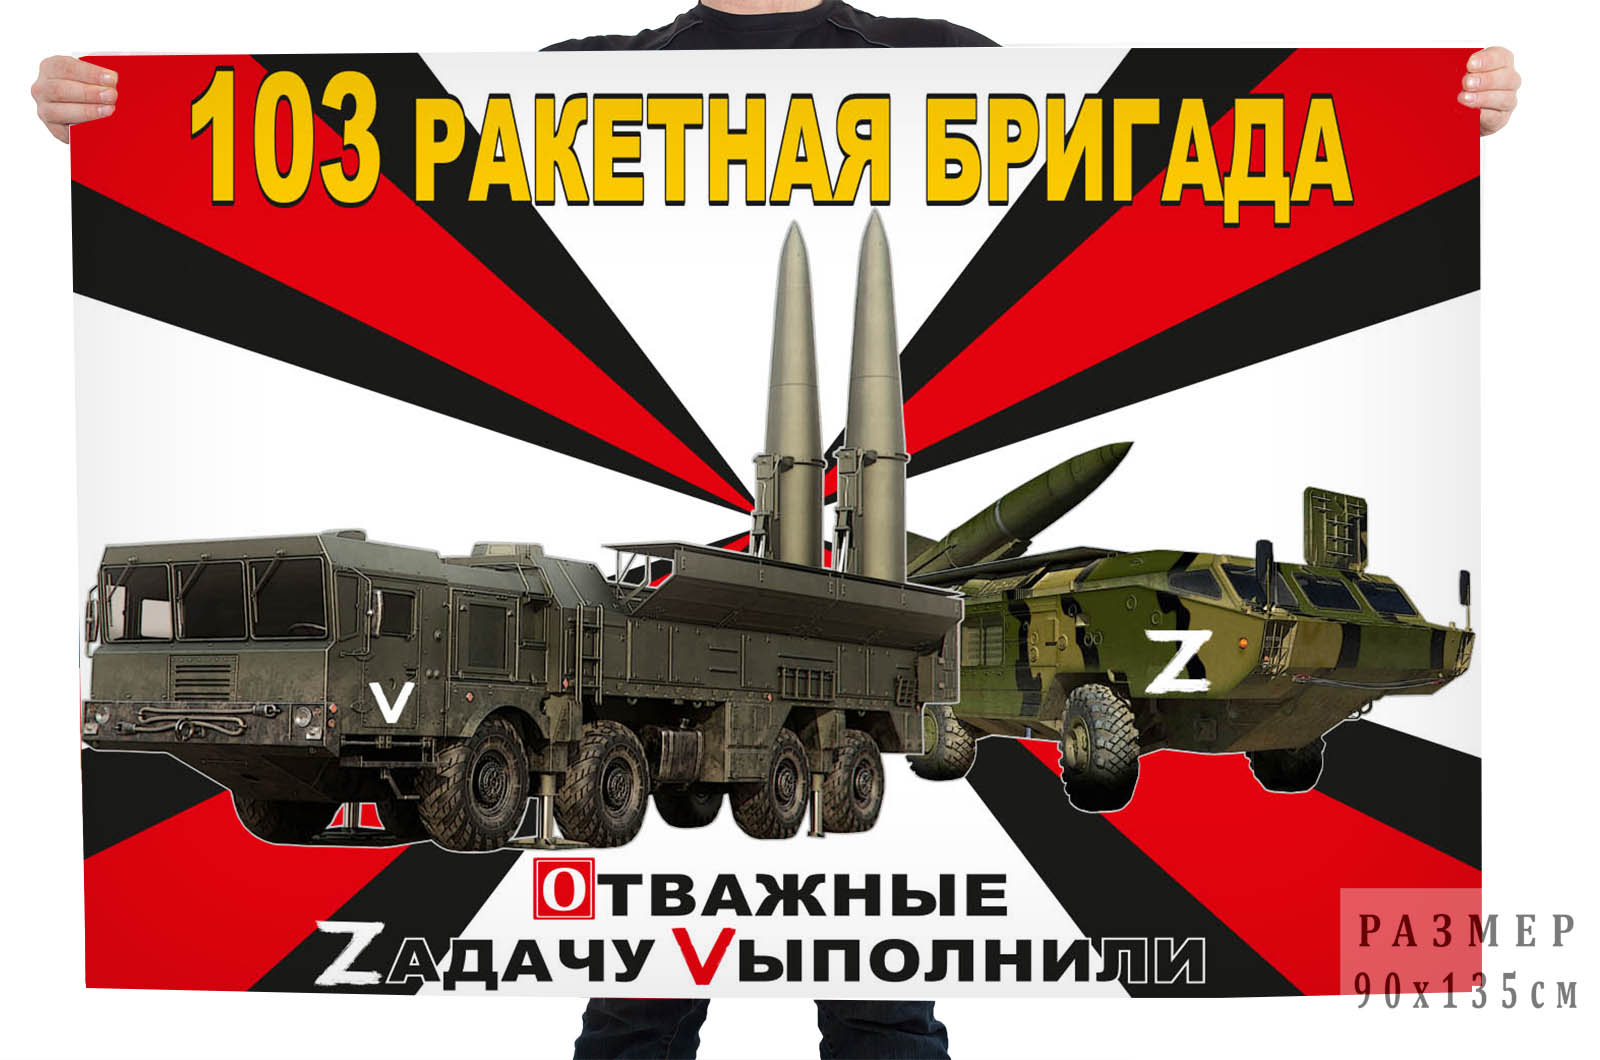 Флаг 103 Ракетной бригады "Военная спецоперация Z"